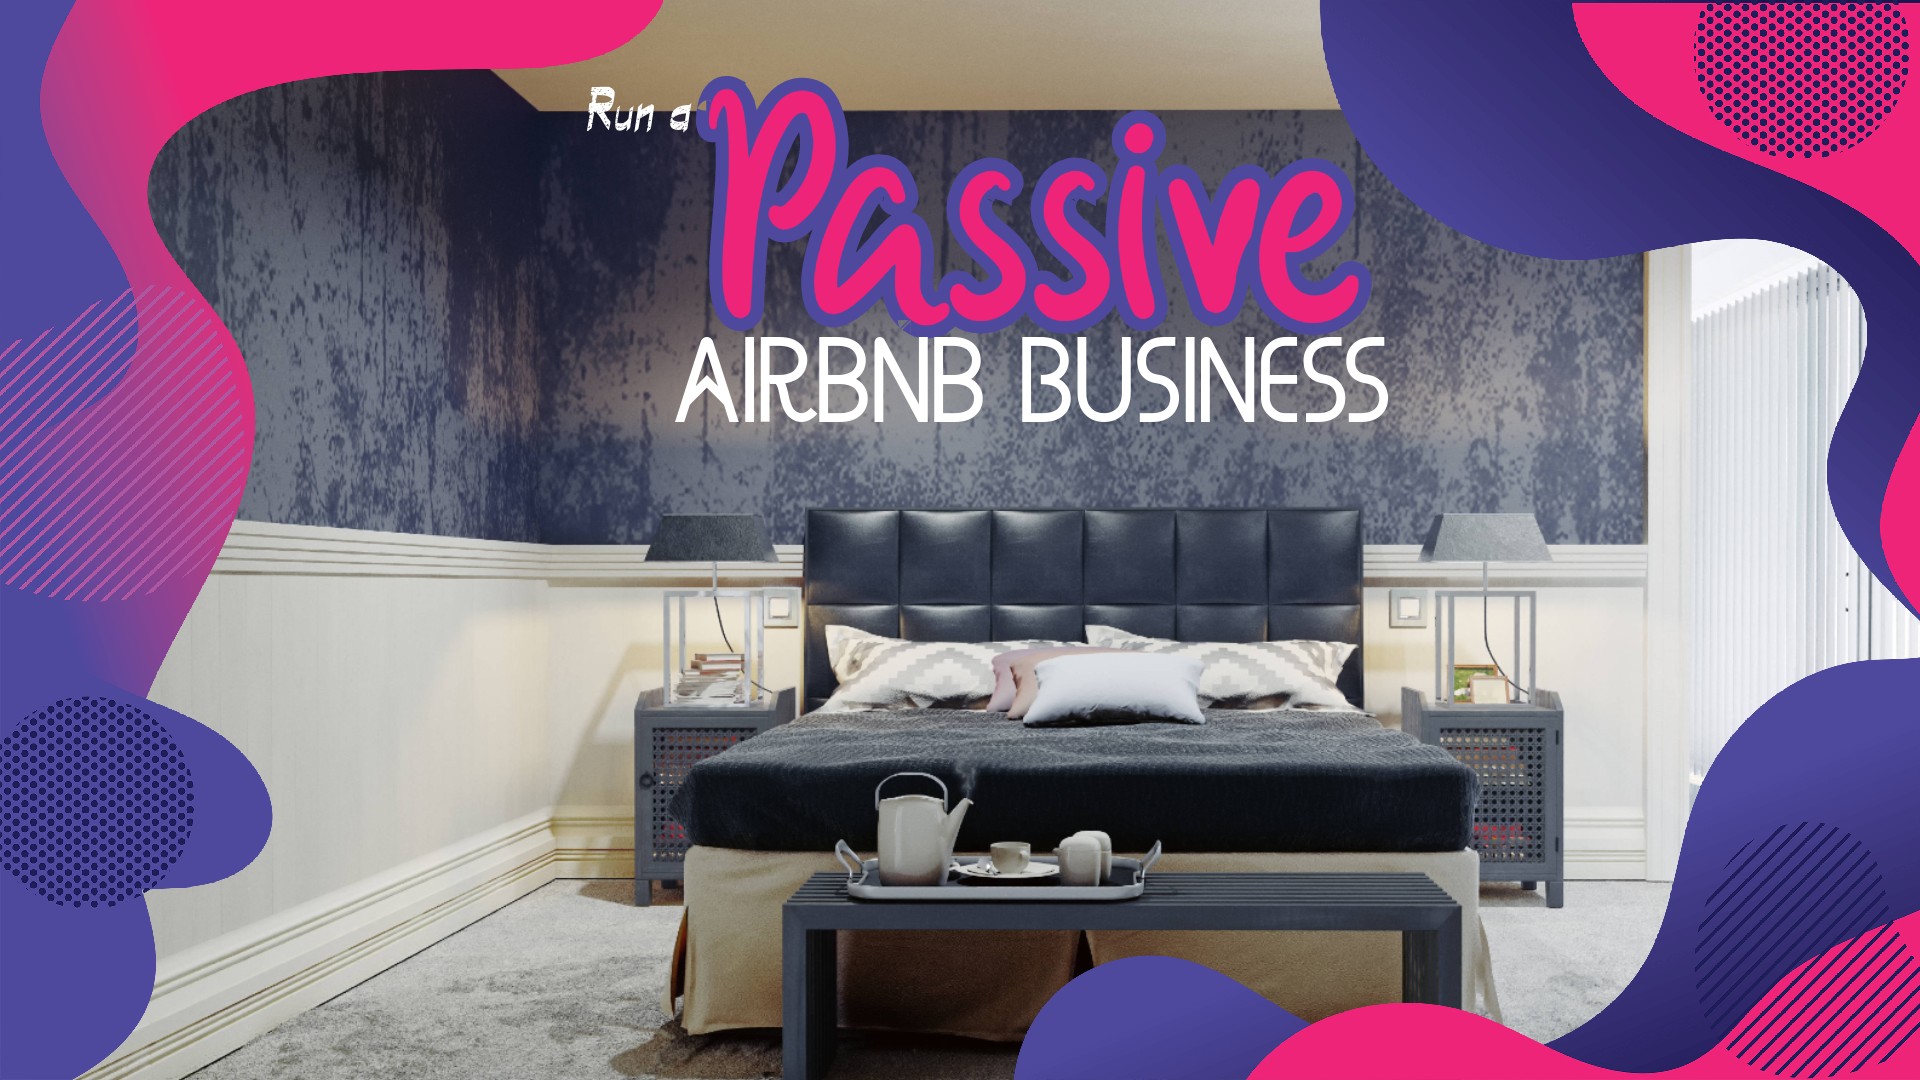 Run a Passive Airbnb Business